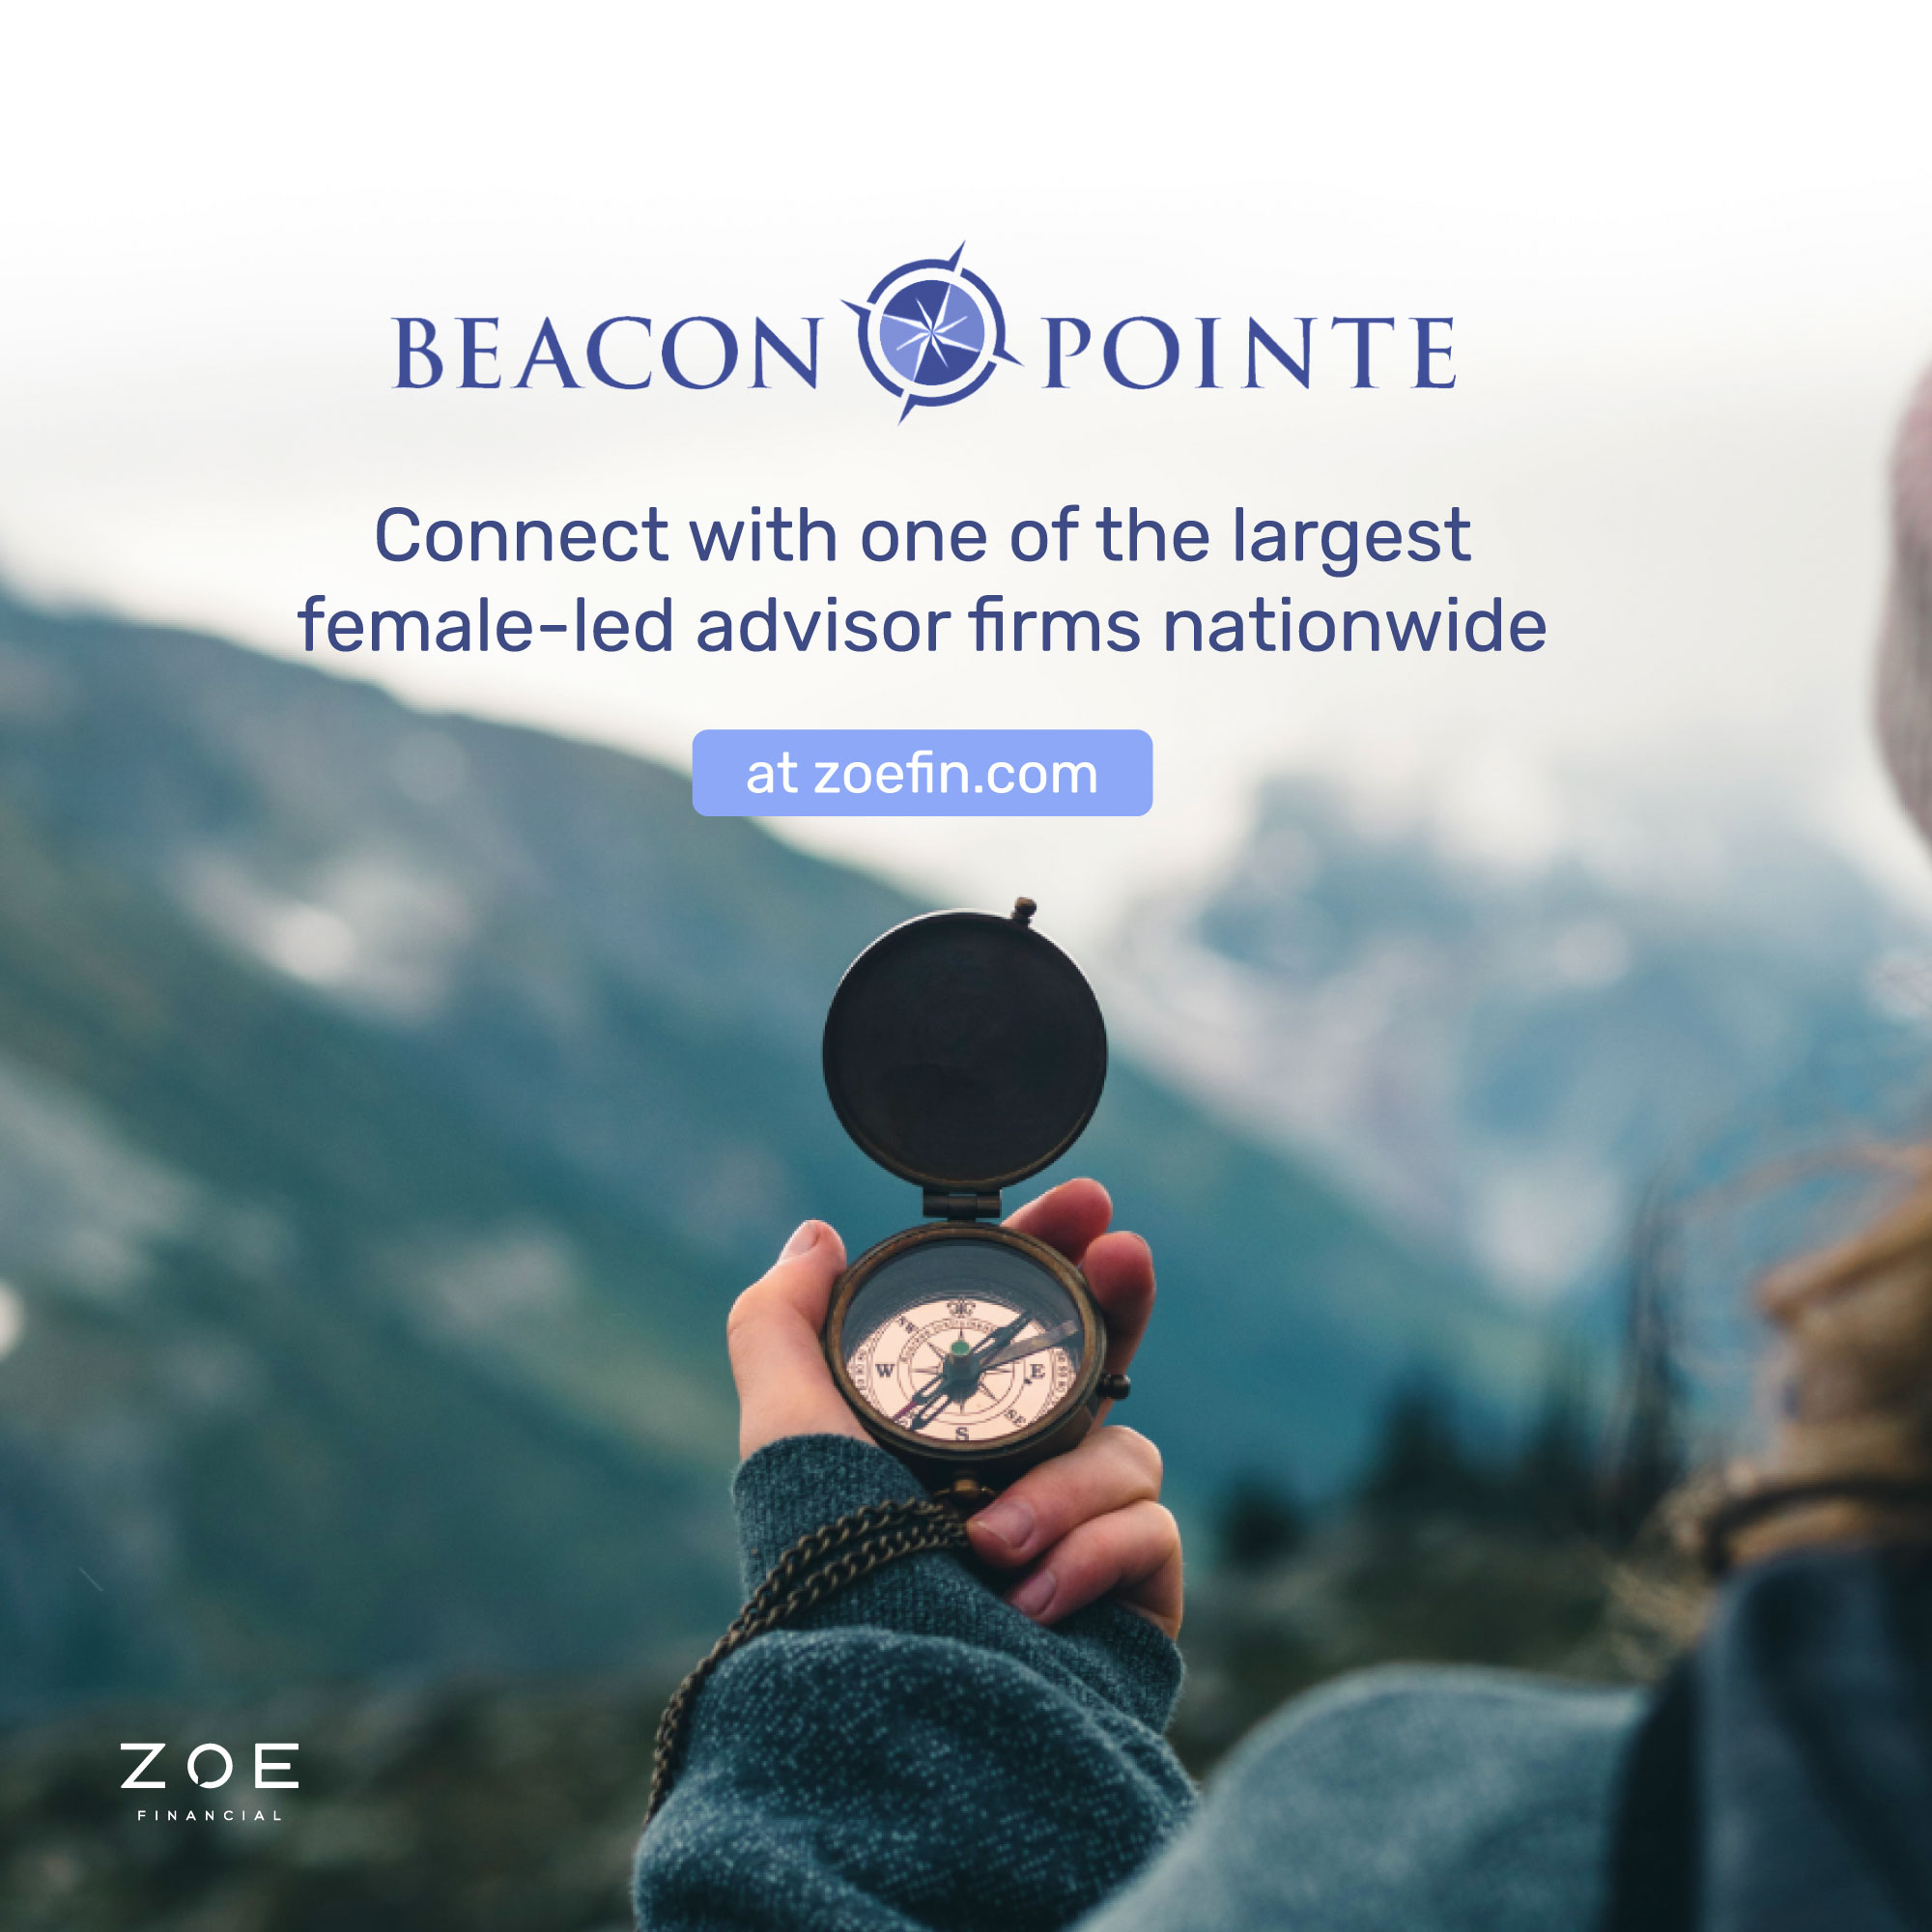 Zoe Announces Partnership With Award-Winning Firm Beacon Pointe Advisors